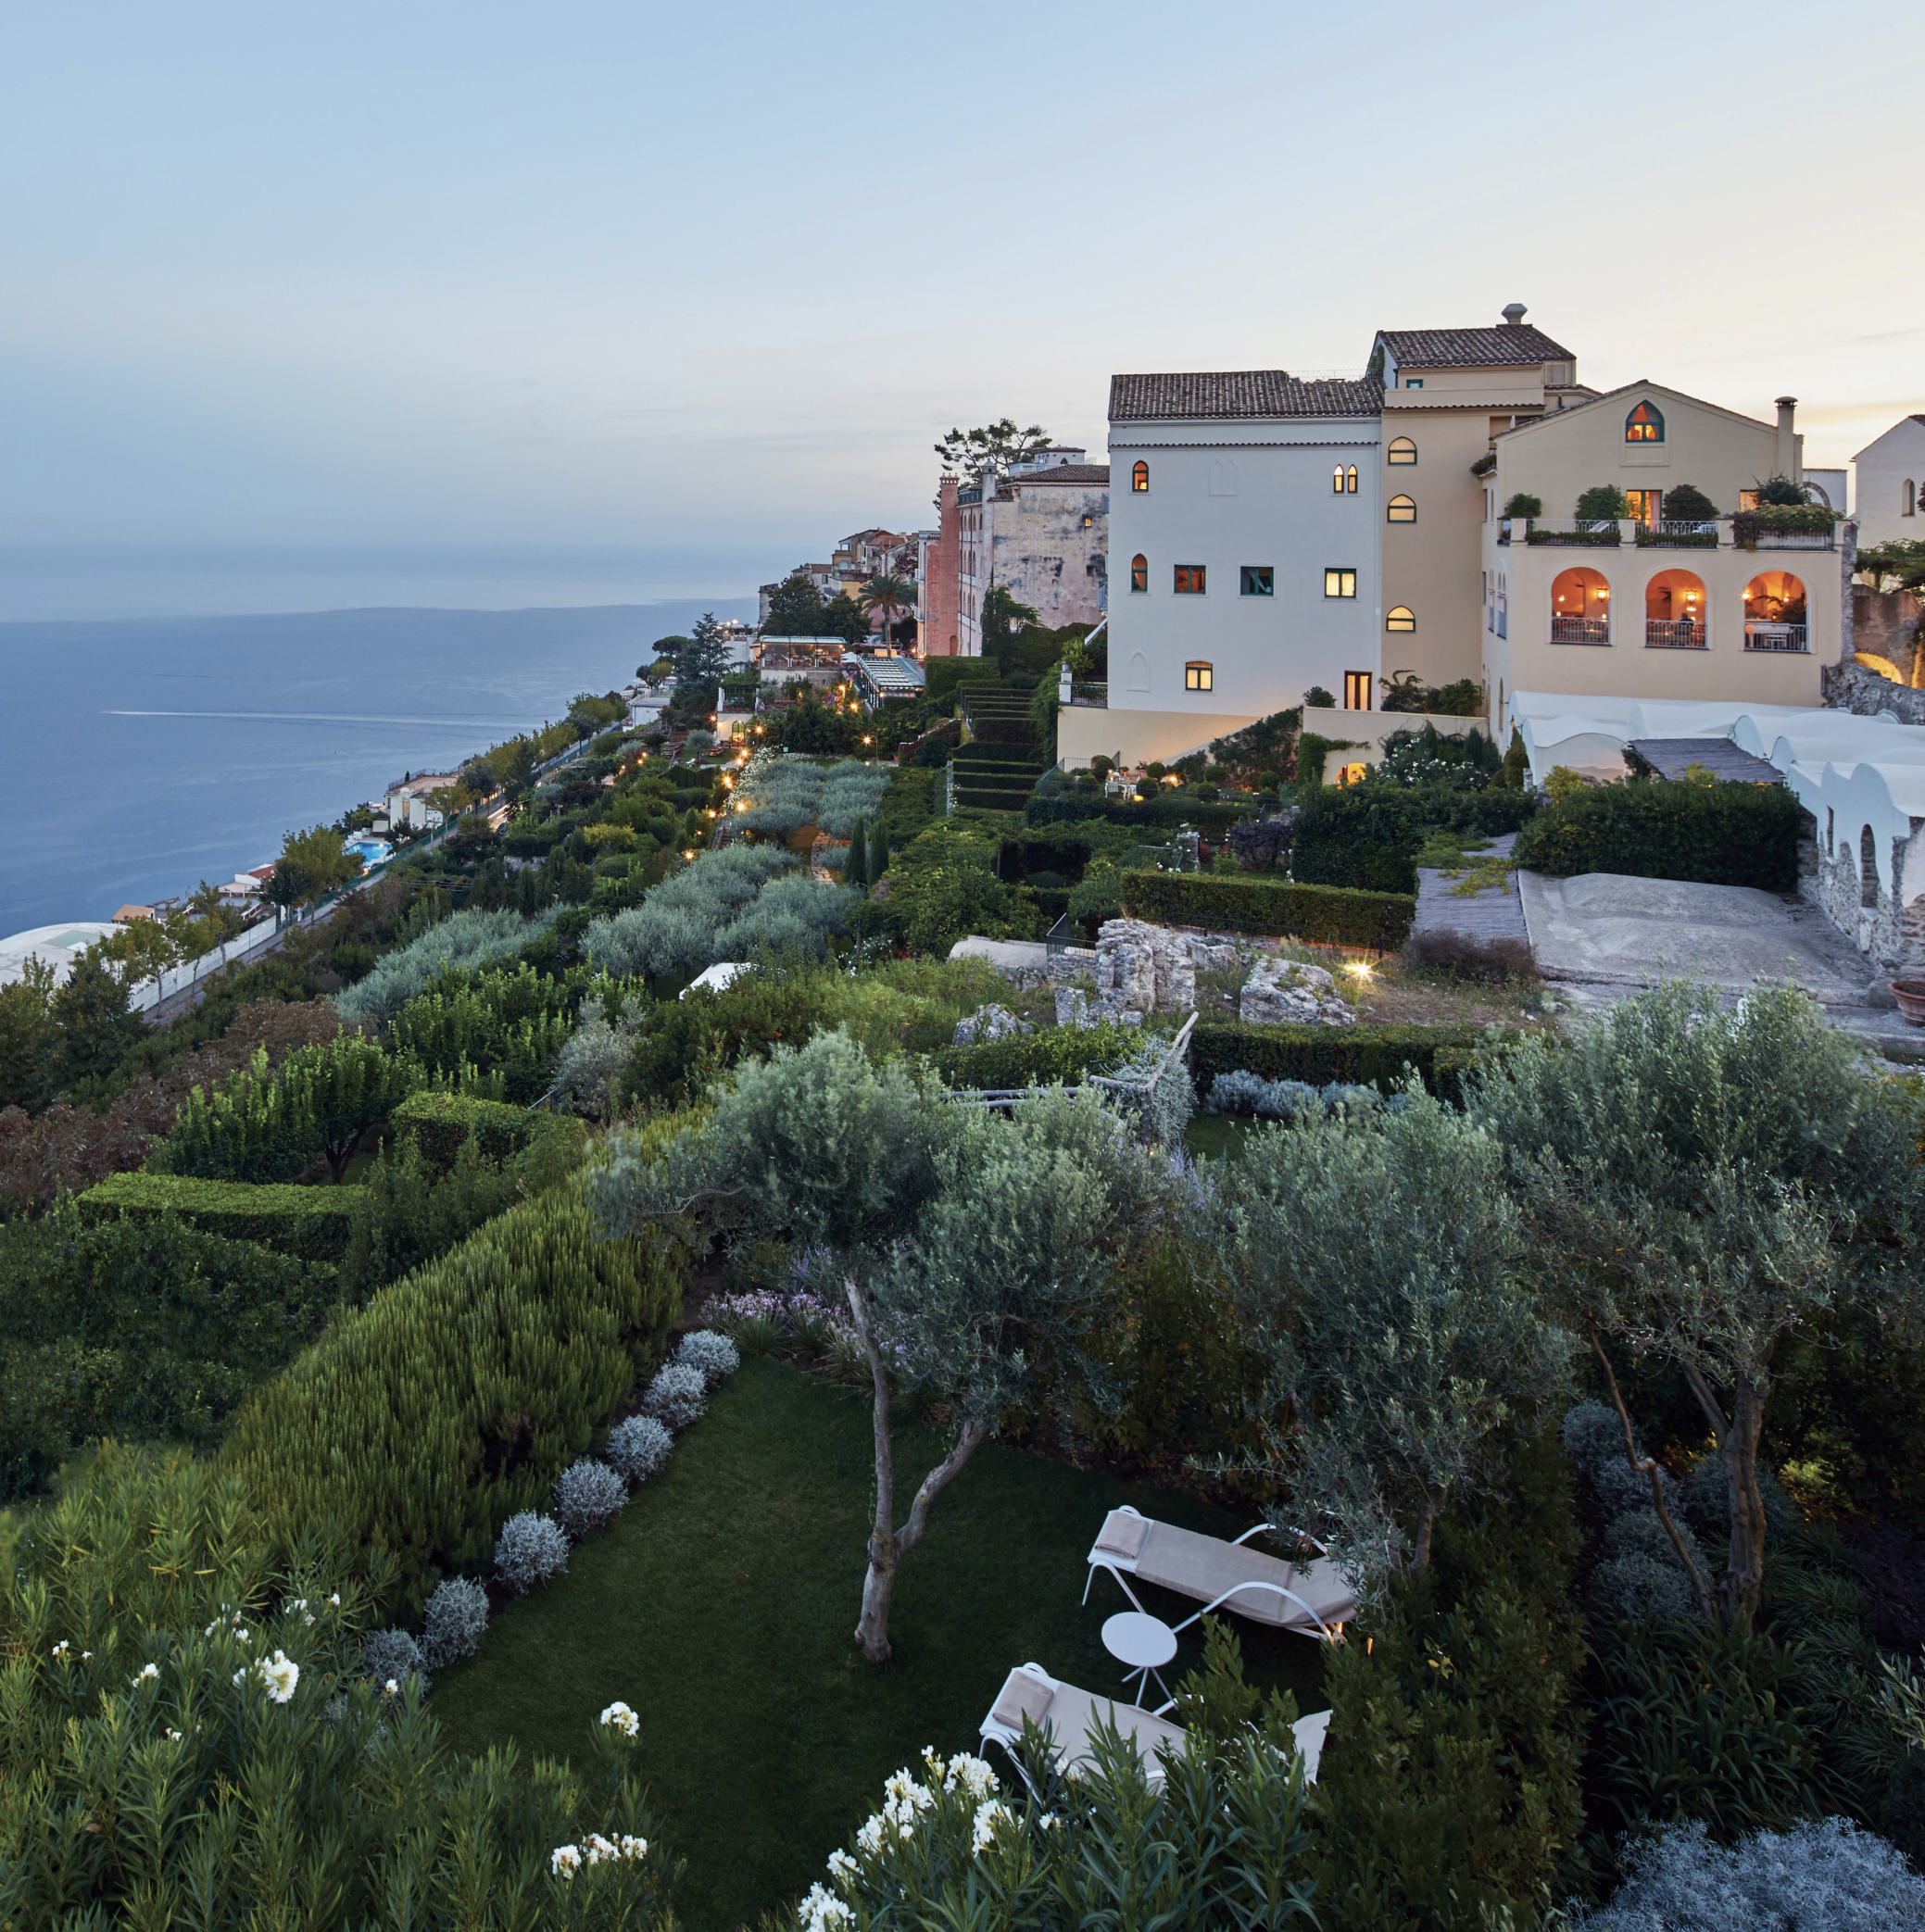 Hotel Caruso for weddings in Ravello on the Amalfi Coast